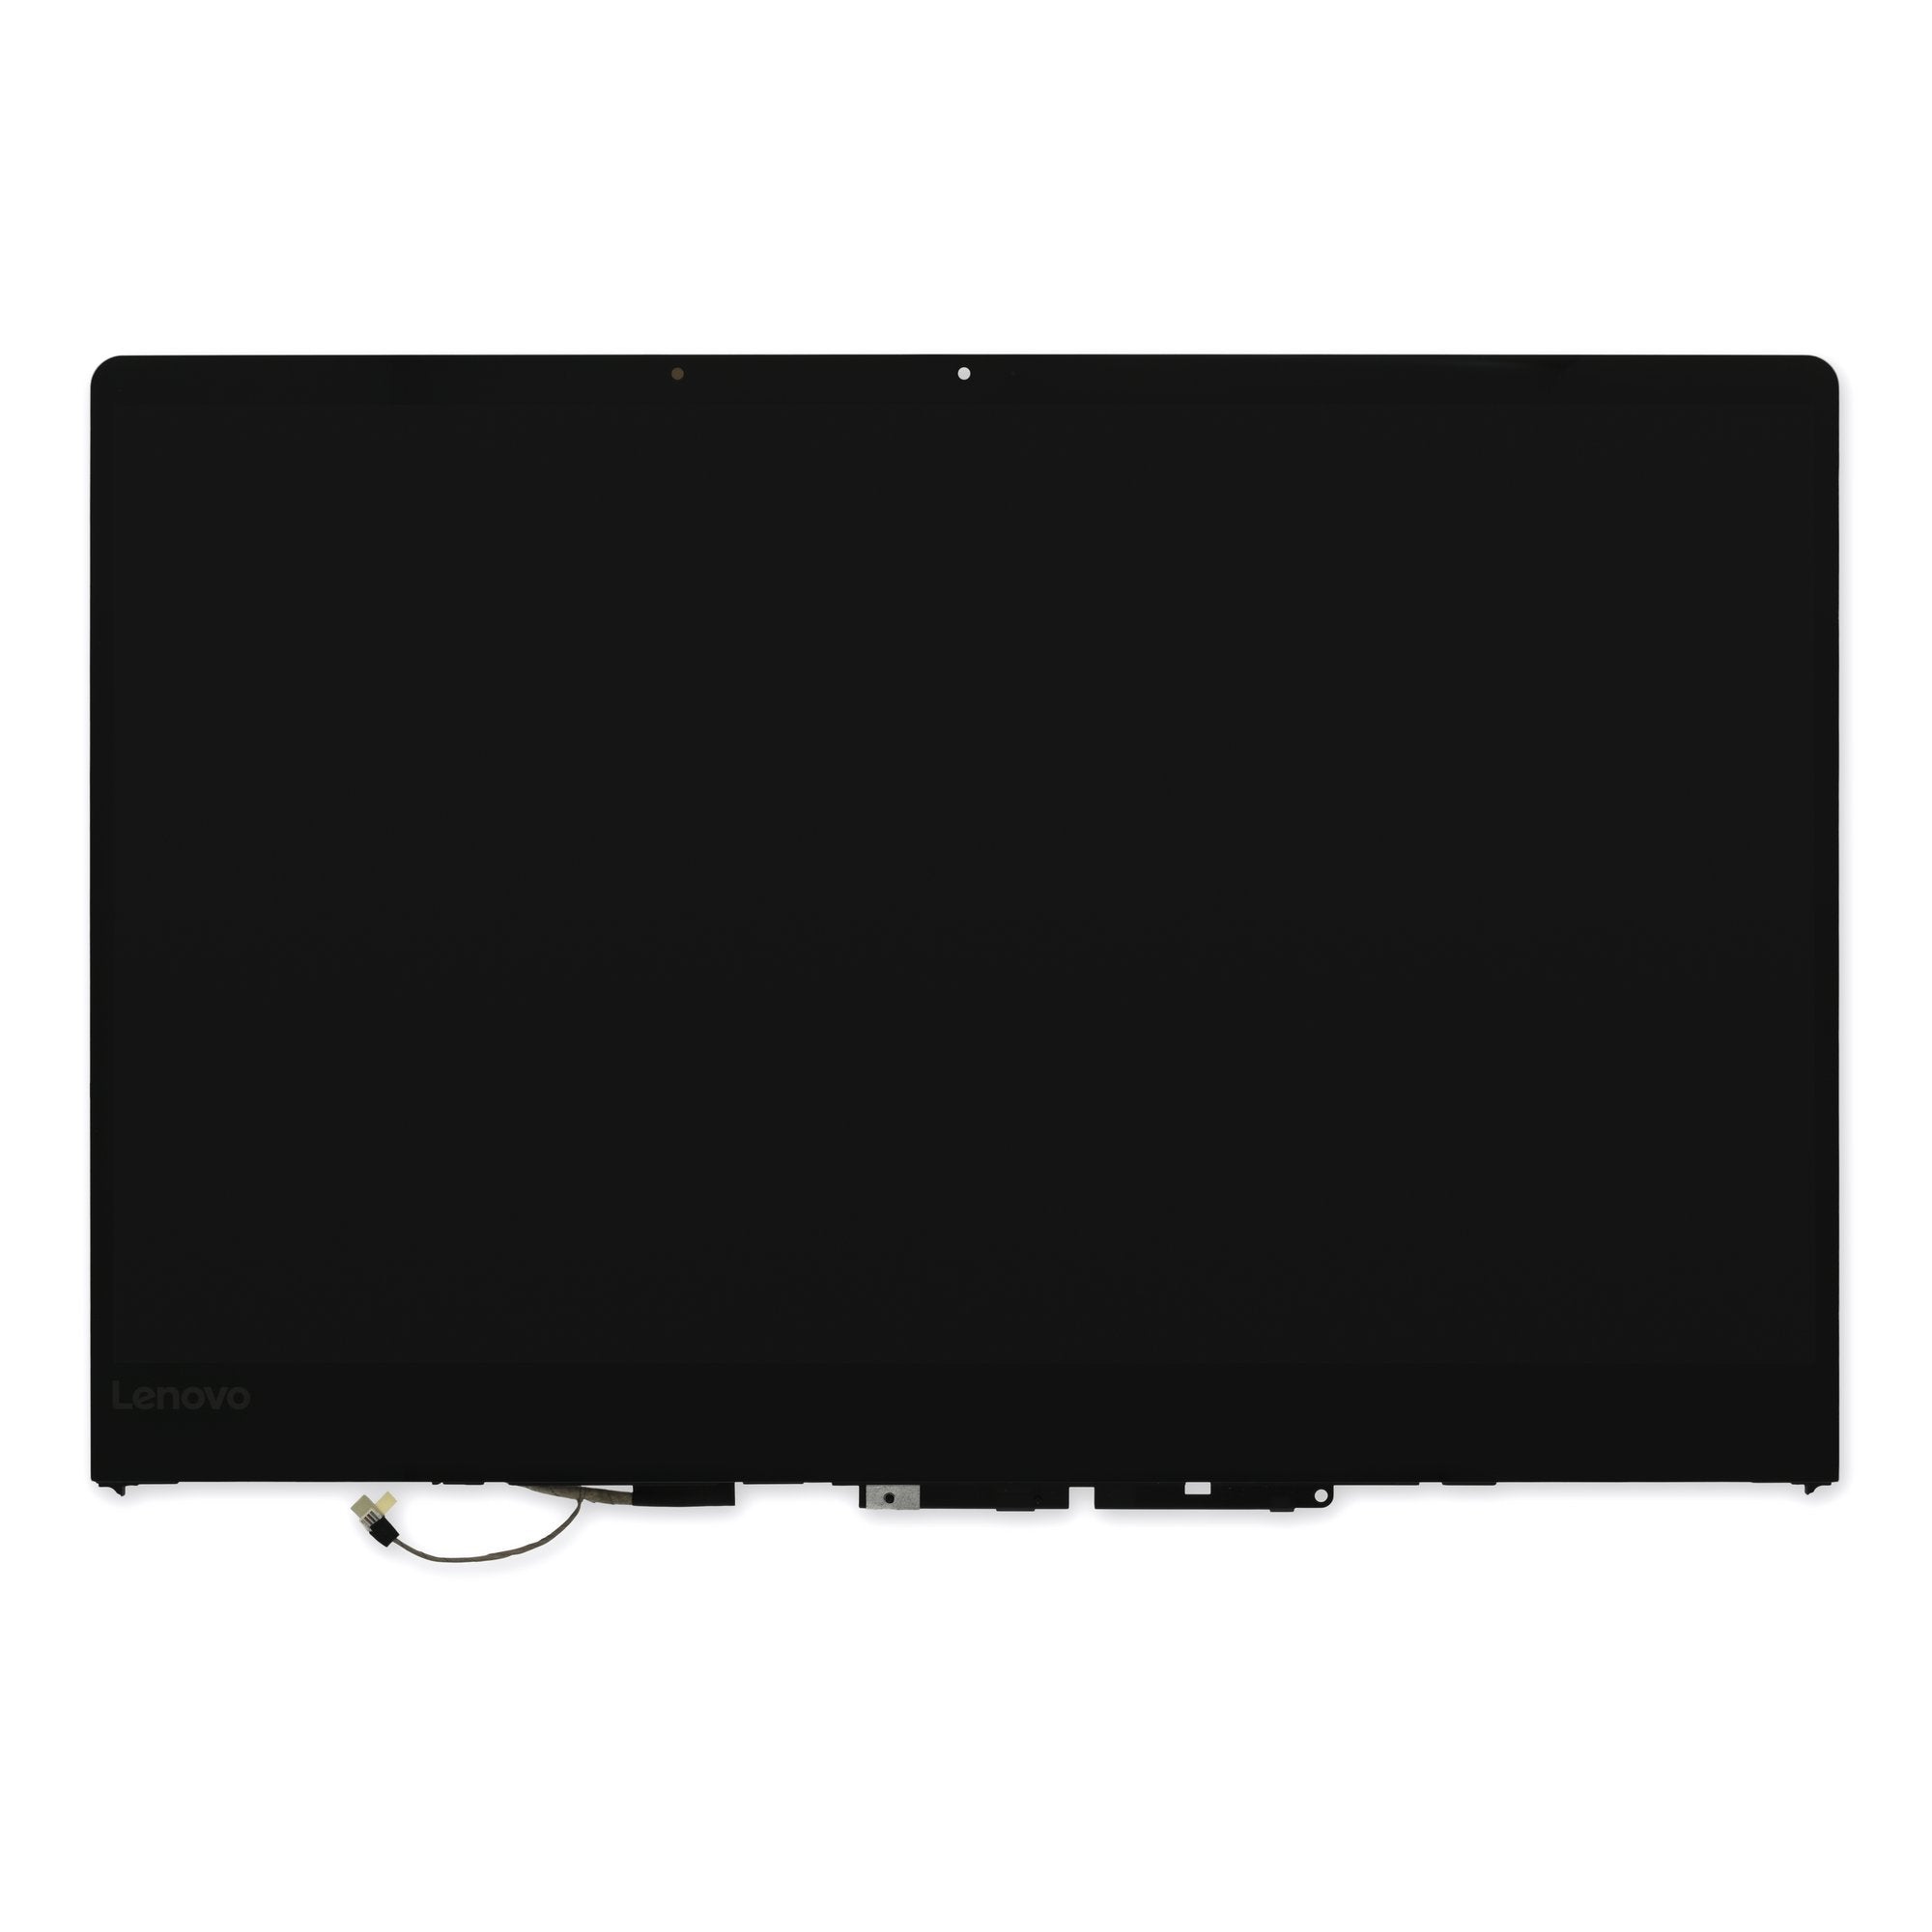 Lenovo IdeaPad Yoga 710-15ISK LCD Panel New